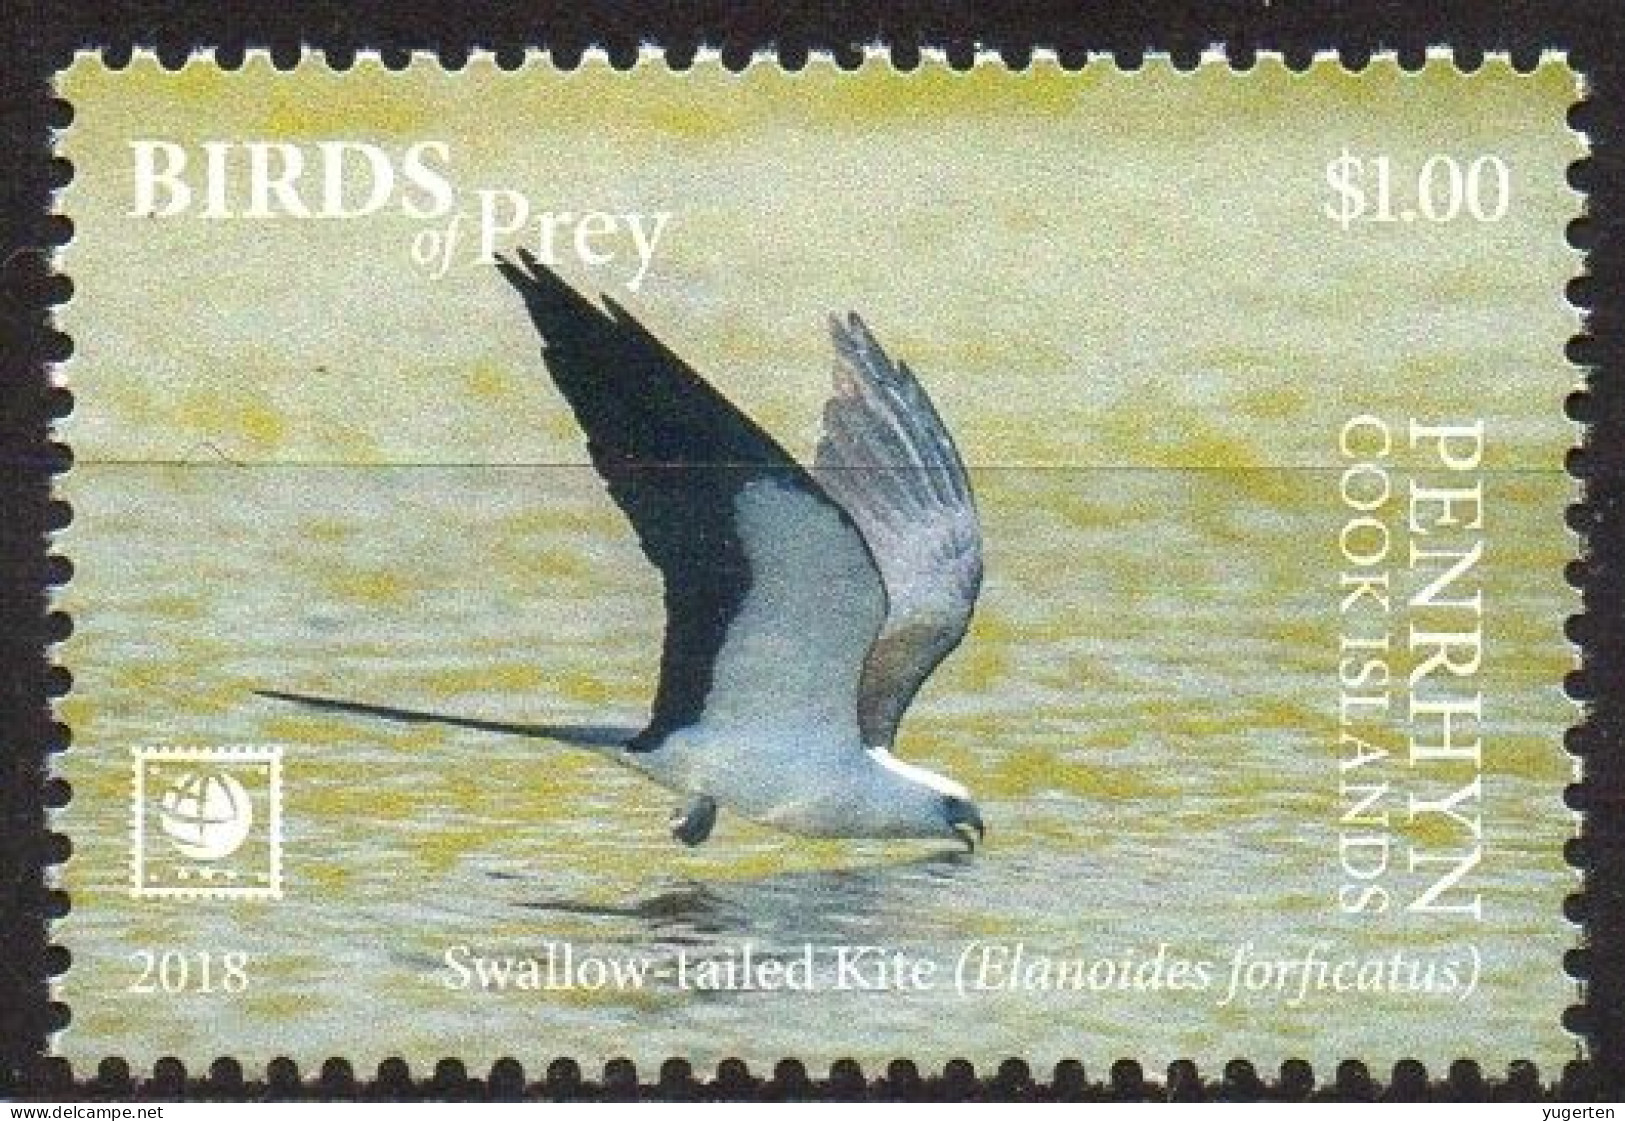 PENRHYN - 1v - MNH -  Swallow-tailed Kite - Eagle Eagles Aquila Aigle Aigles Adler - Birds - Vögel - Aguilas Aquile - Adler & Greifvögel